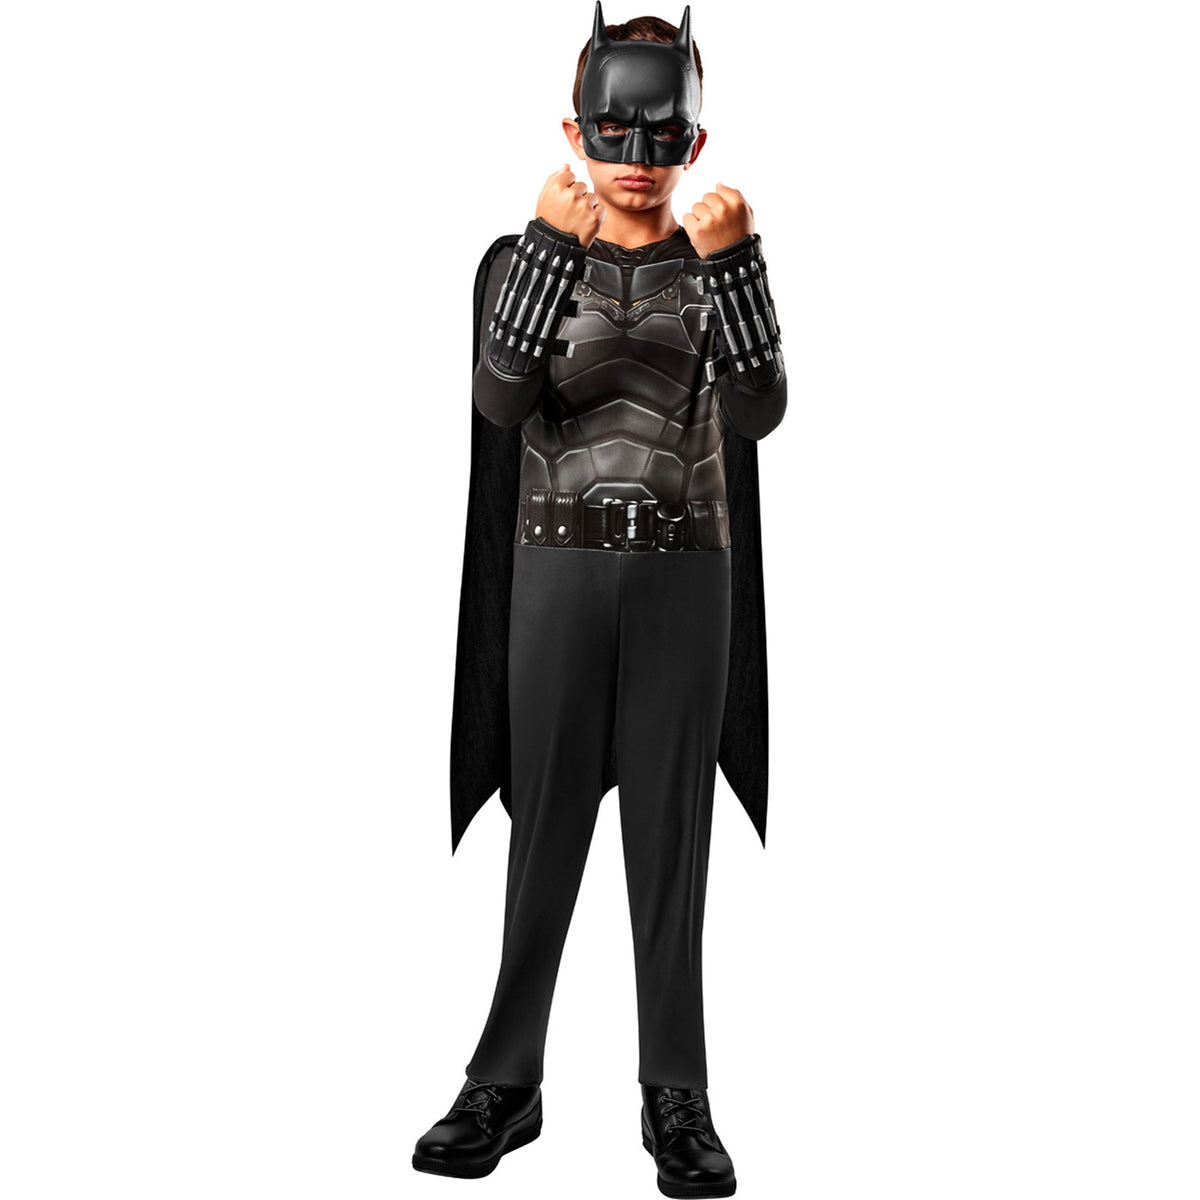 RUBIES II (Ruby Slipper Sales) Costume Accessories DC Comics Batman Gauntlets for Kids 195884013700